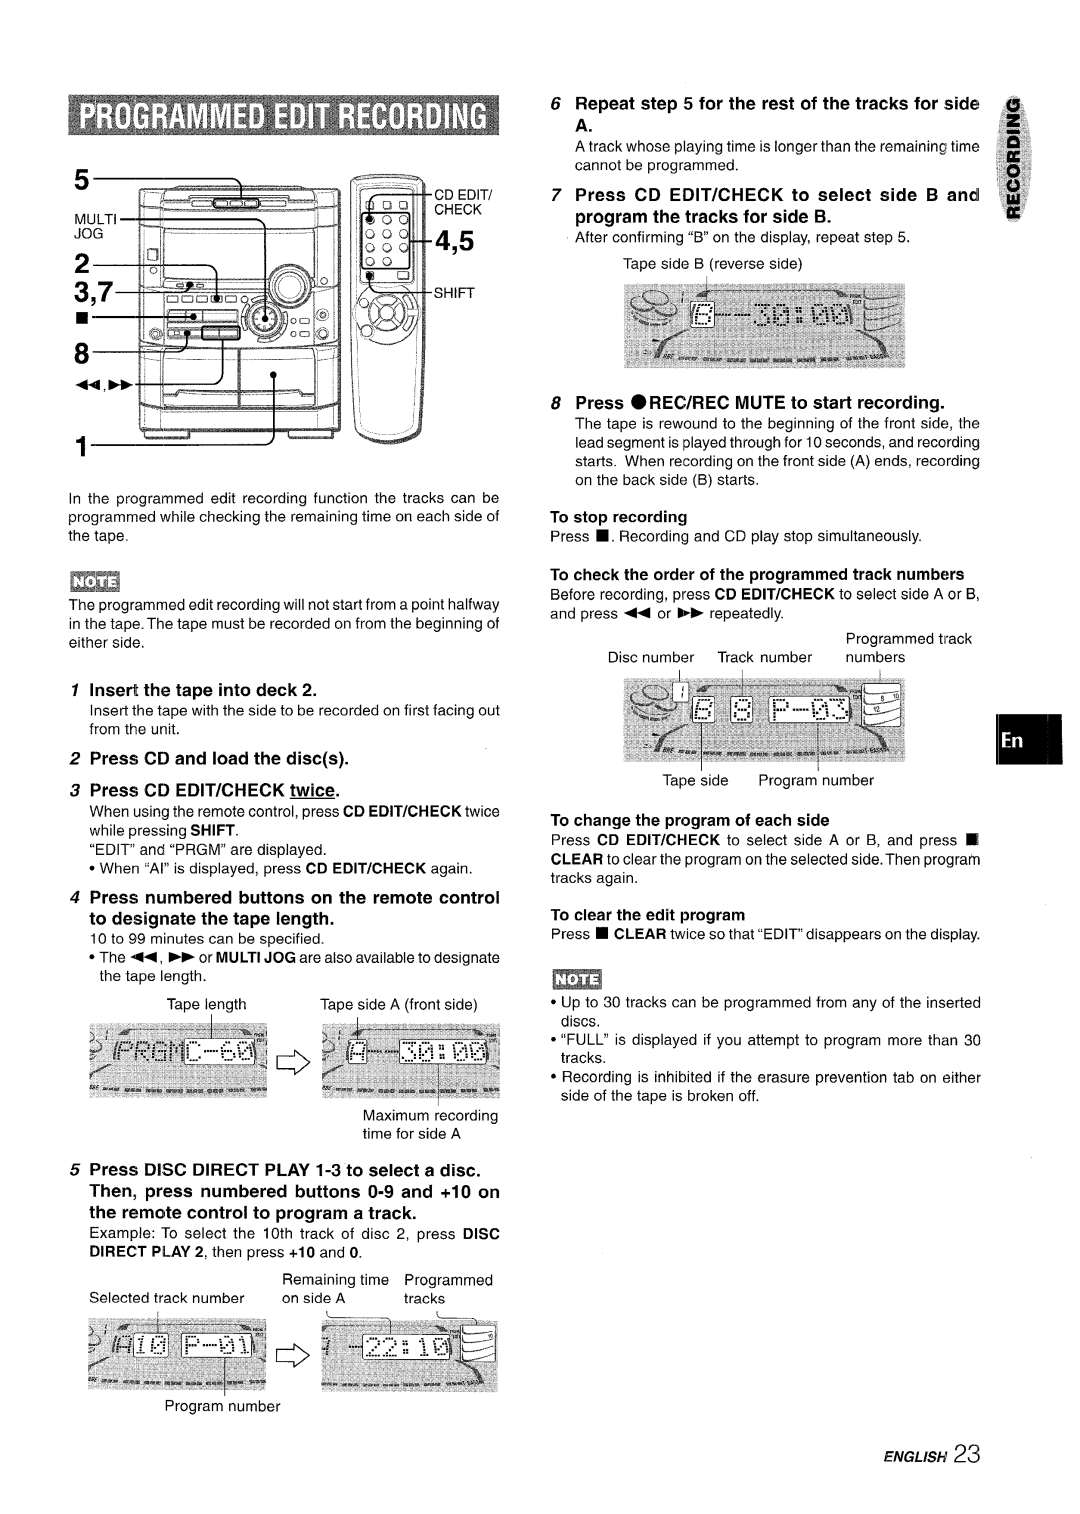 Sony NSX-A777 iI @ J, Press CD and load the discs 3 Press CD EDIT/CHECK twice, Press REC/REC MUTE to start recordiw, g r~ 